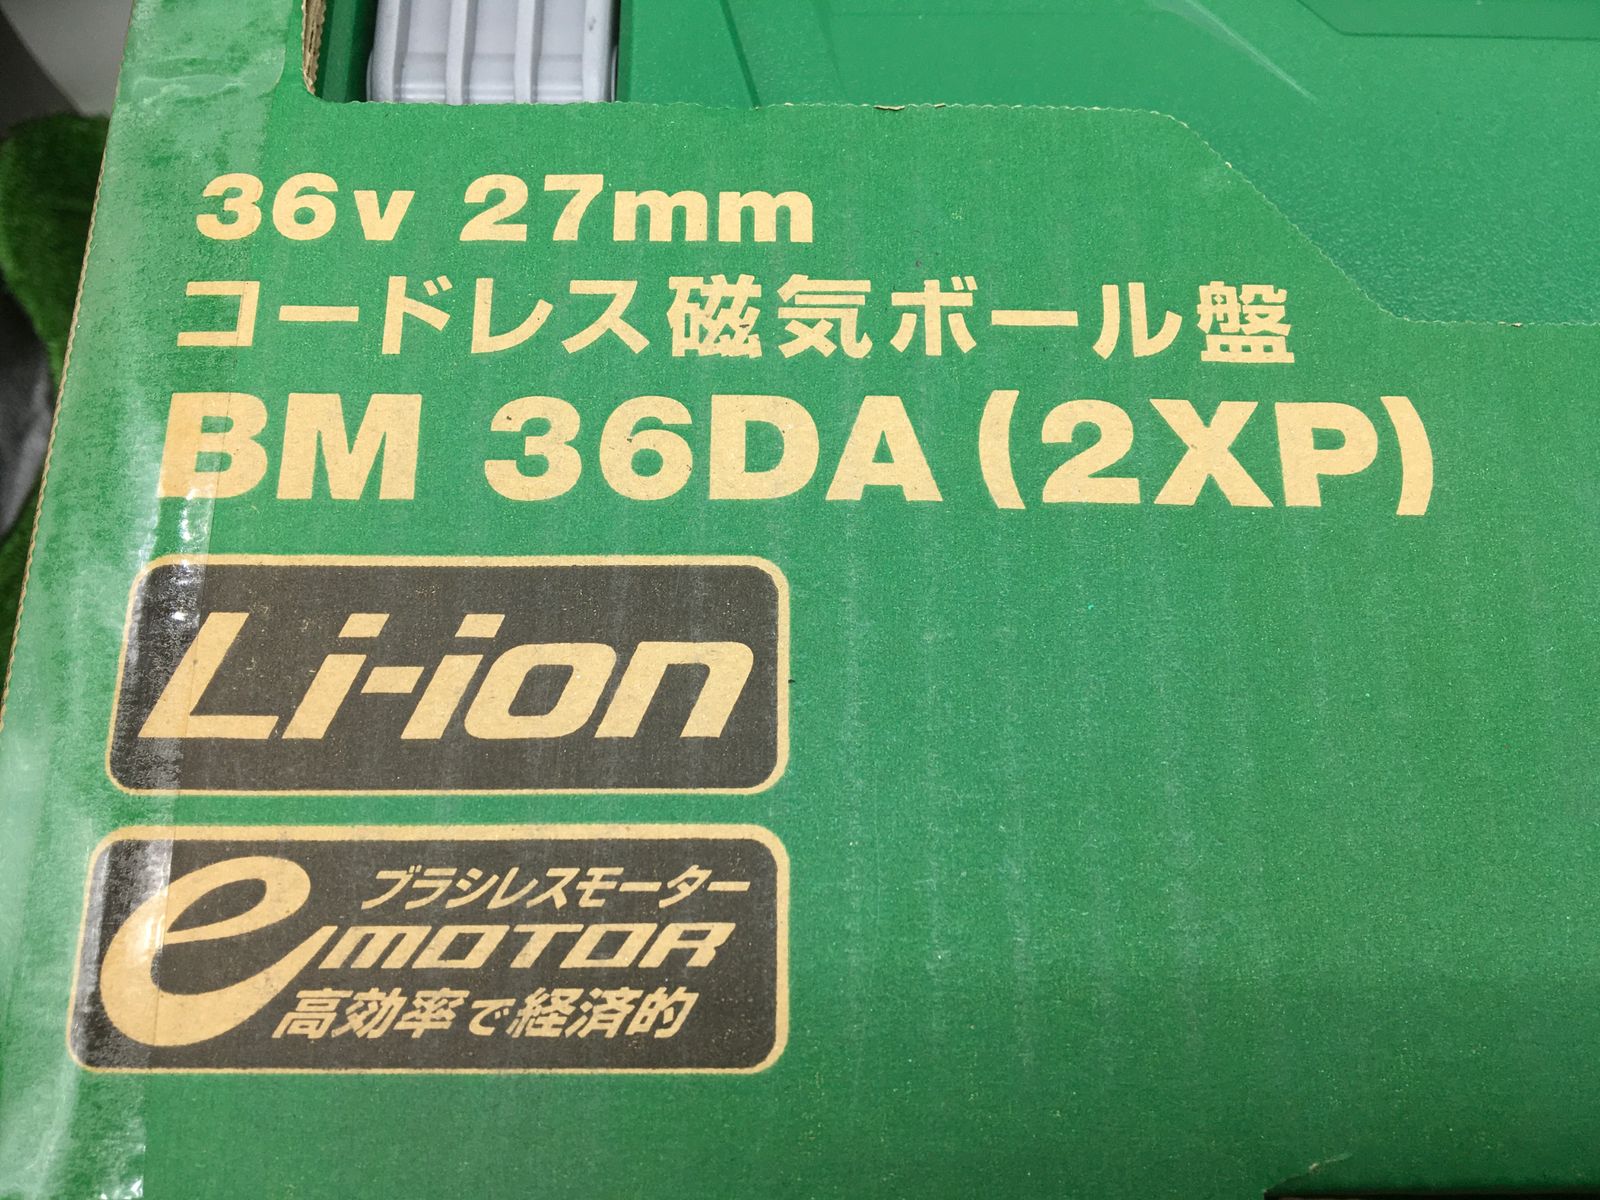 HIKOKI マルチボルト コードレス磁気ボール盤 BM36DA(2XP) - 2